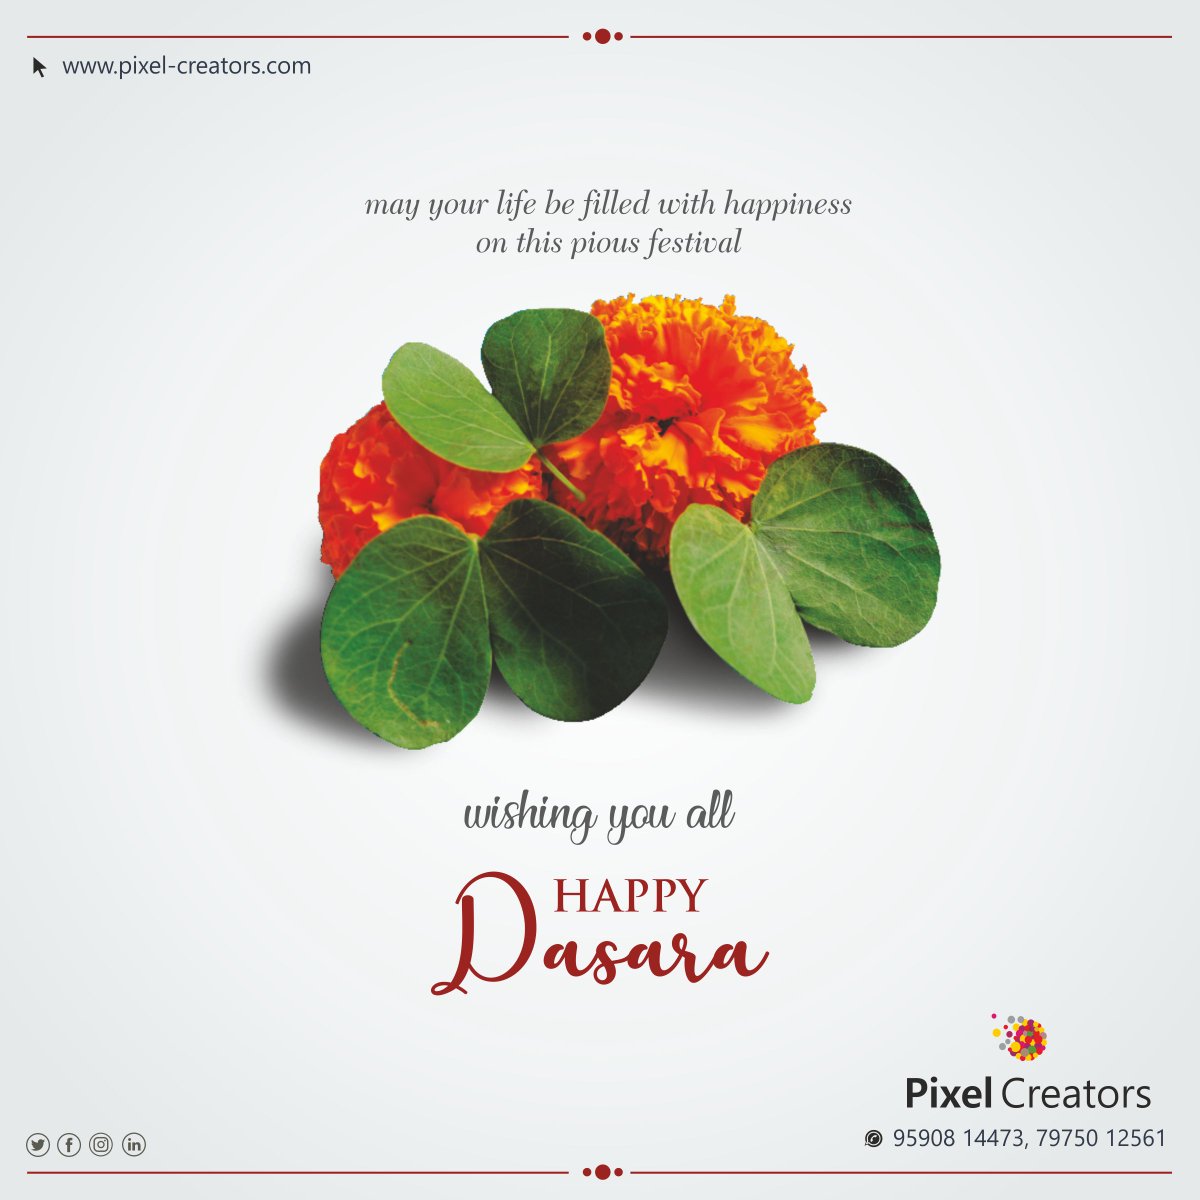 Happy Dasara - Pixel Creators
#HappyDasara #dasara2020 #webdesign #pixelcreators #digitalmraketingagency